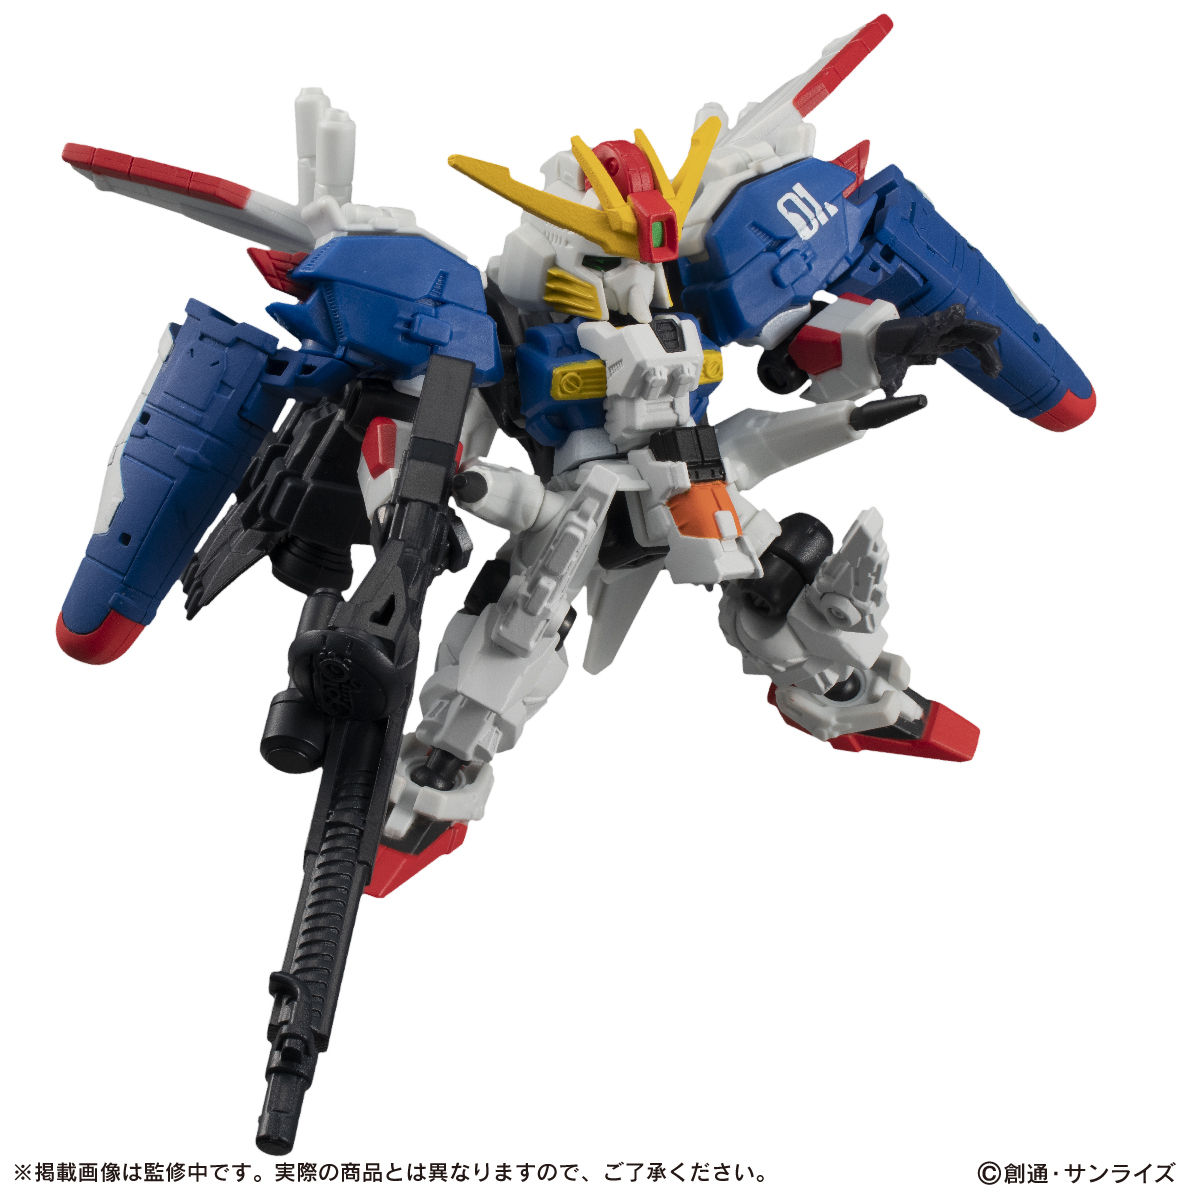 MS Ensemble EX20 MSA-0011[Ext] Ex-S Gundam